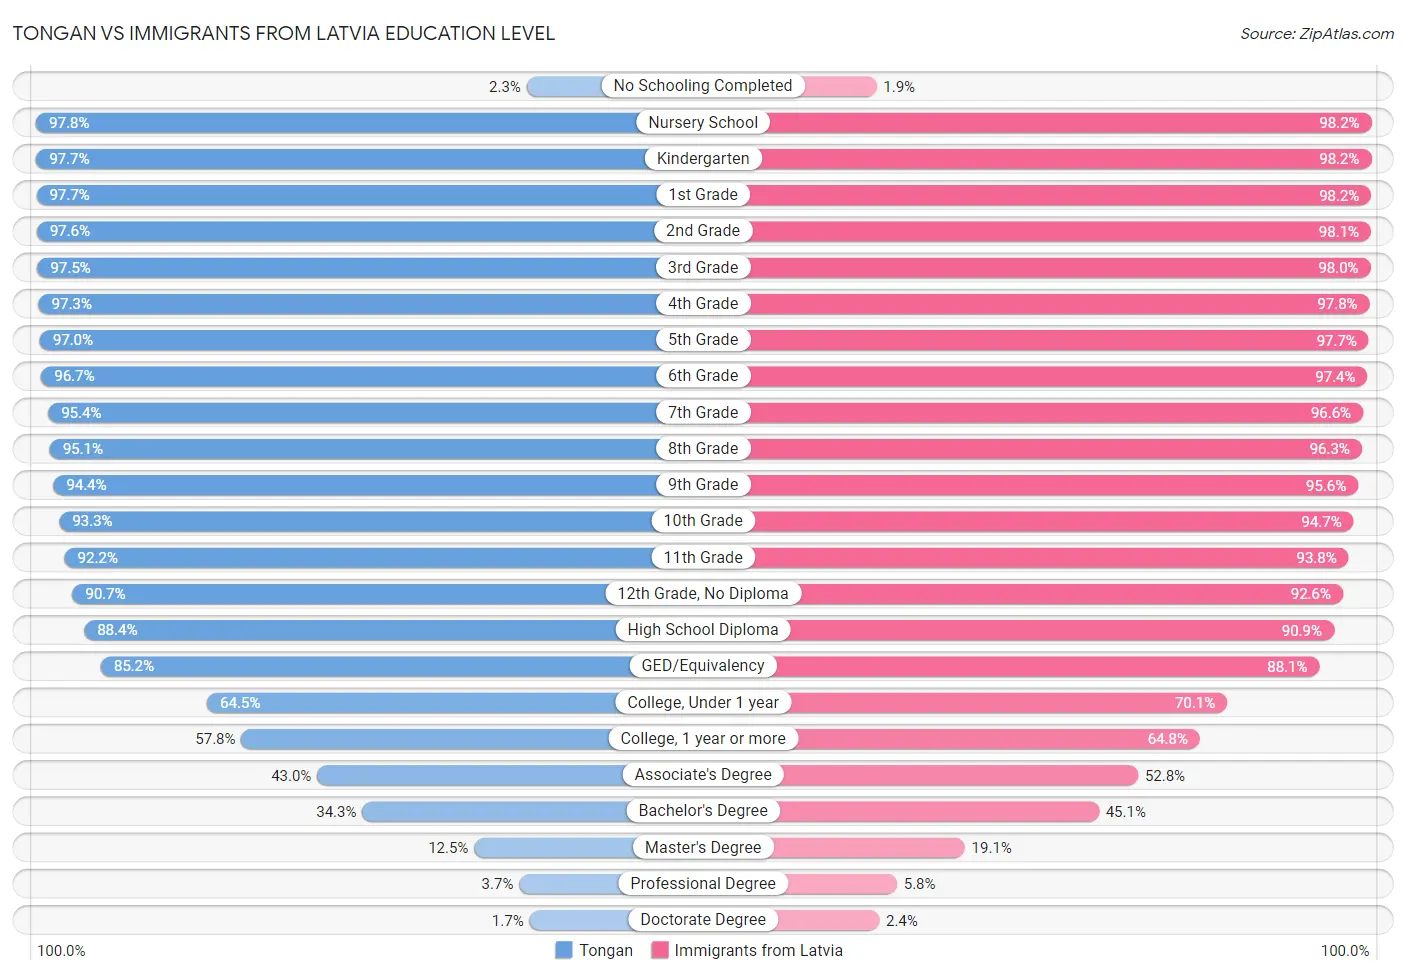 Tongan vs Immigrants from Latvia Education Level